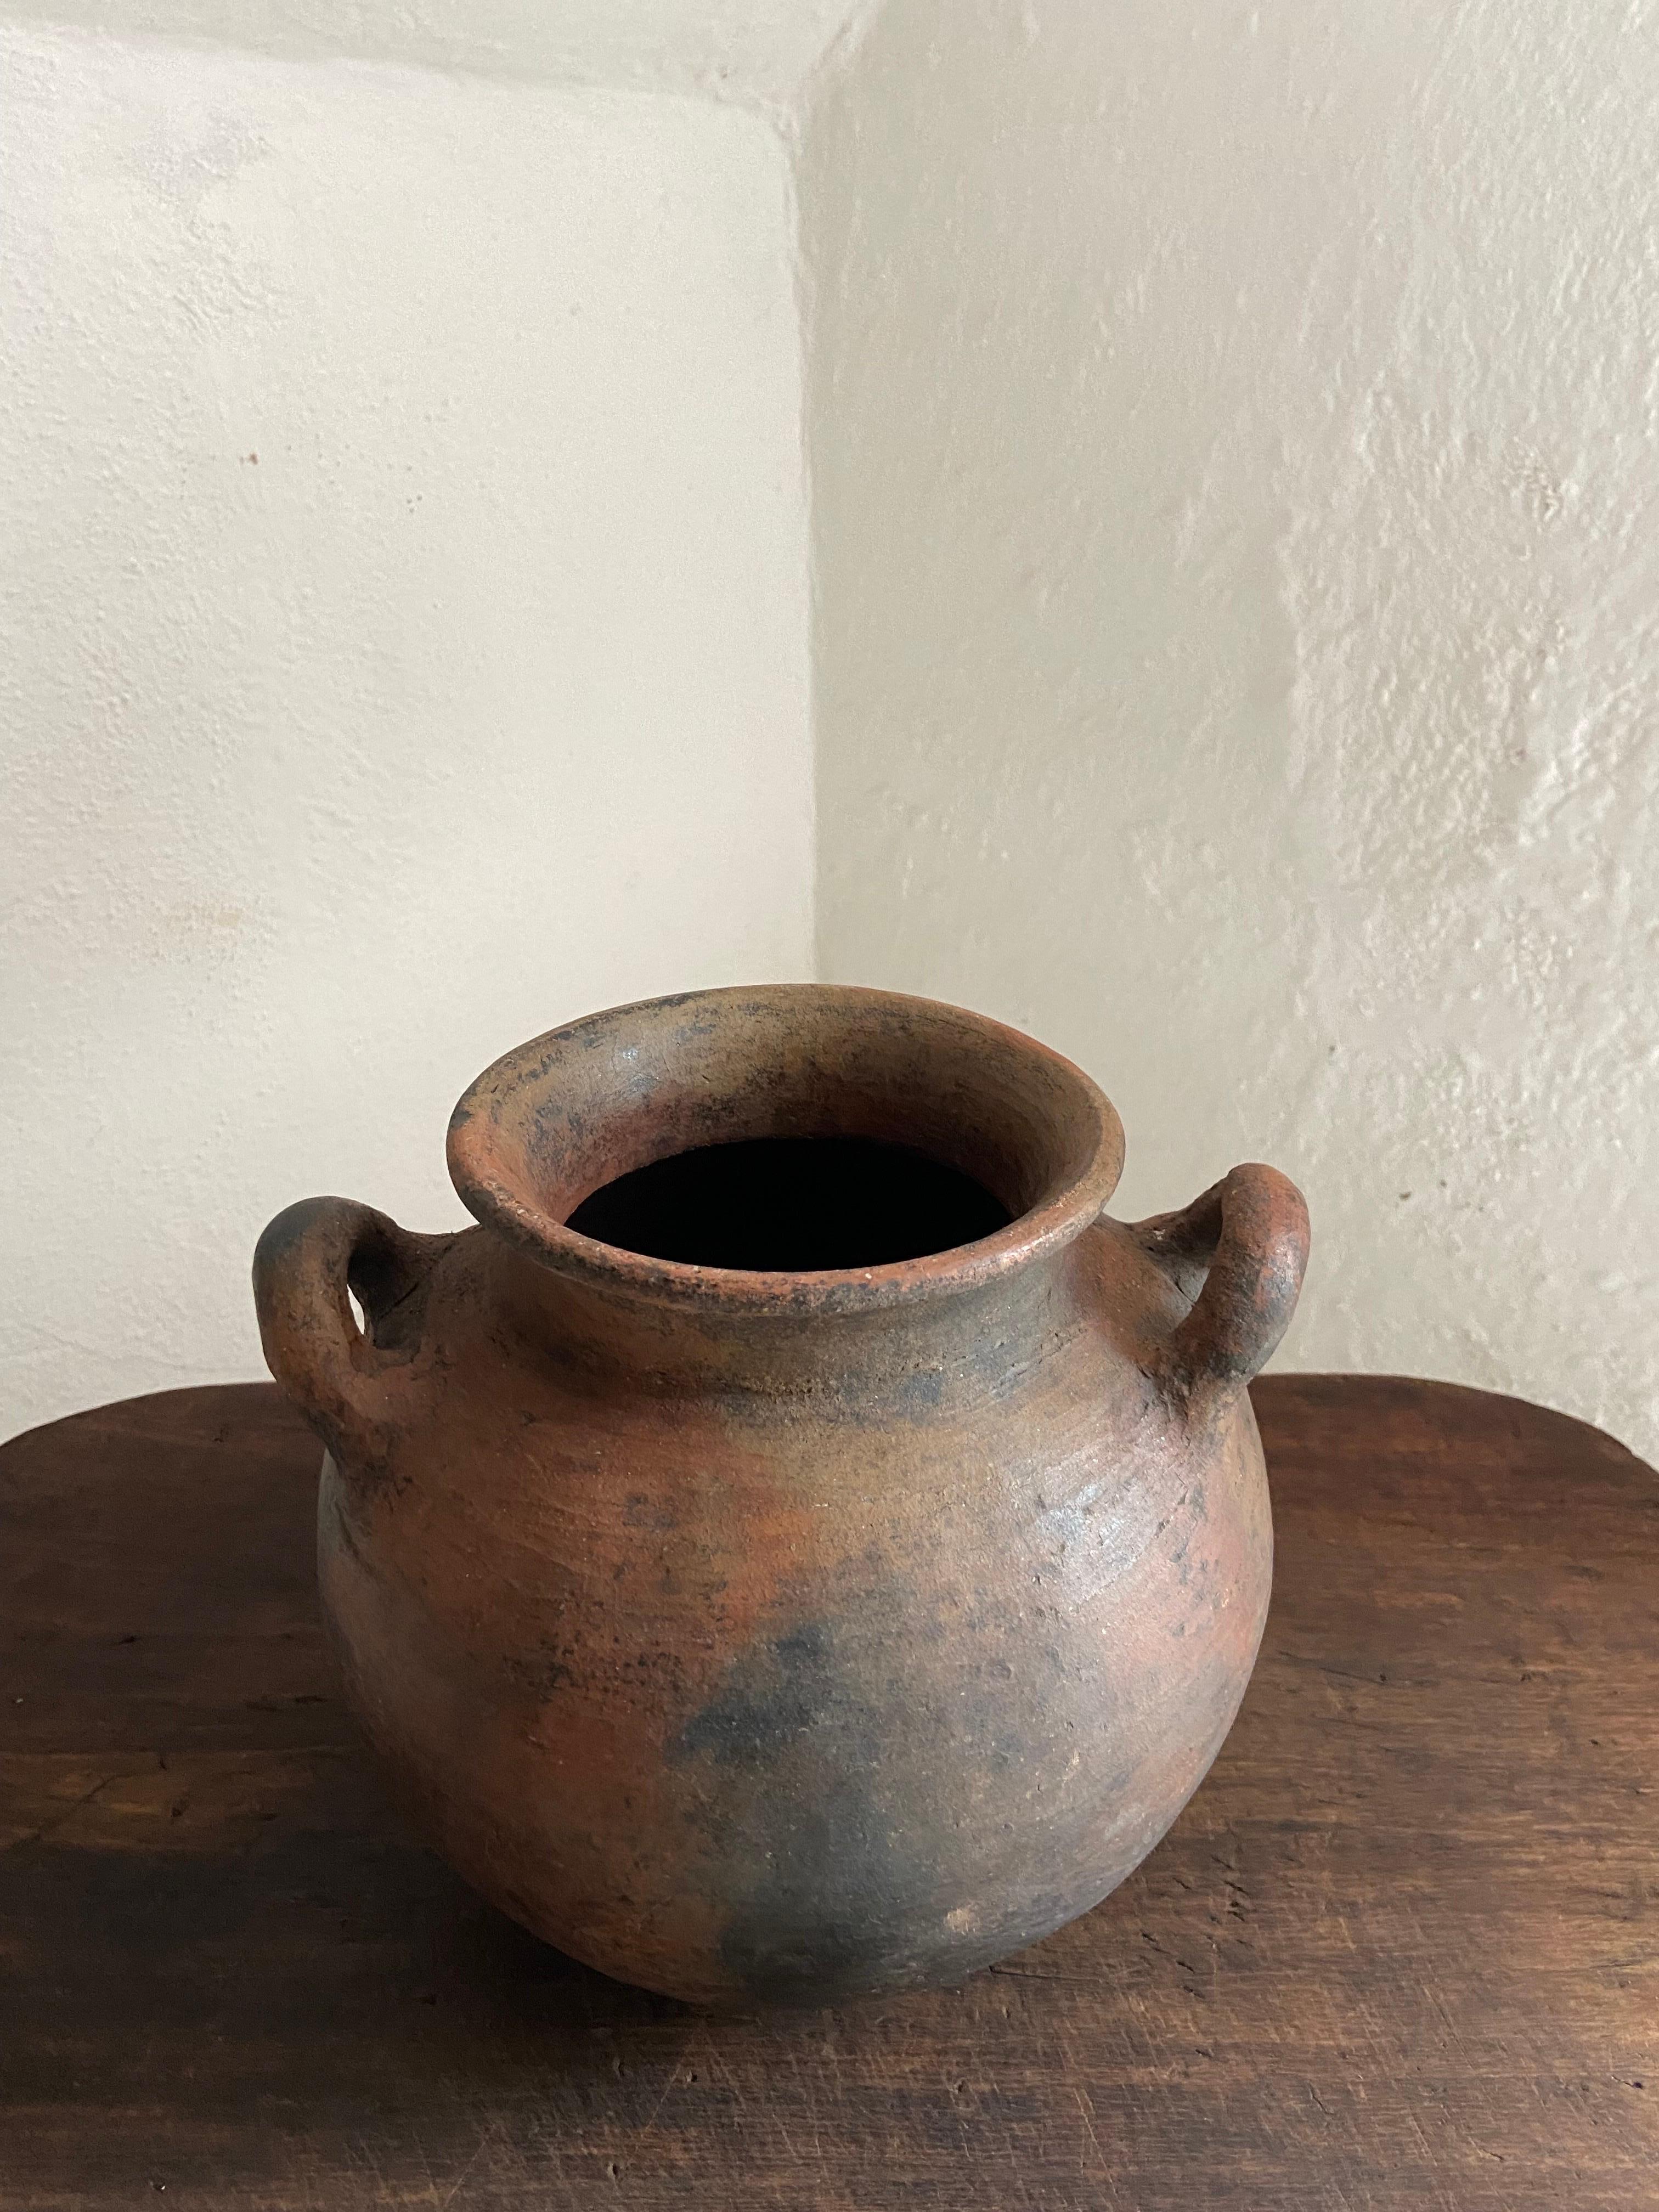 Mixteca ceramic vessel with handles, circa 1940´s.